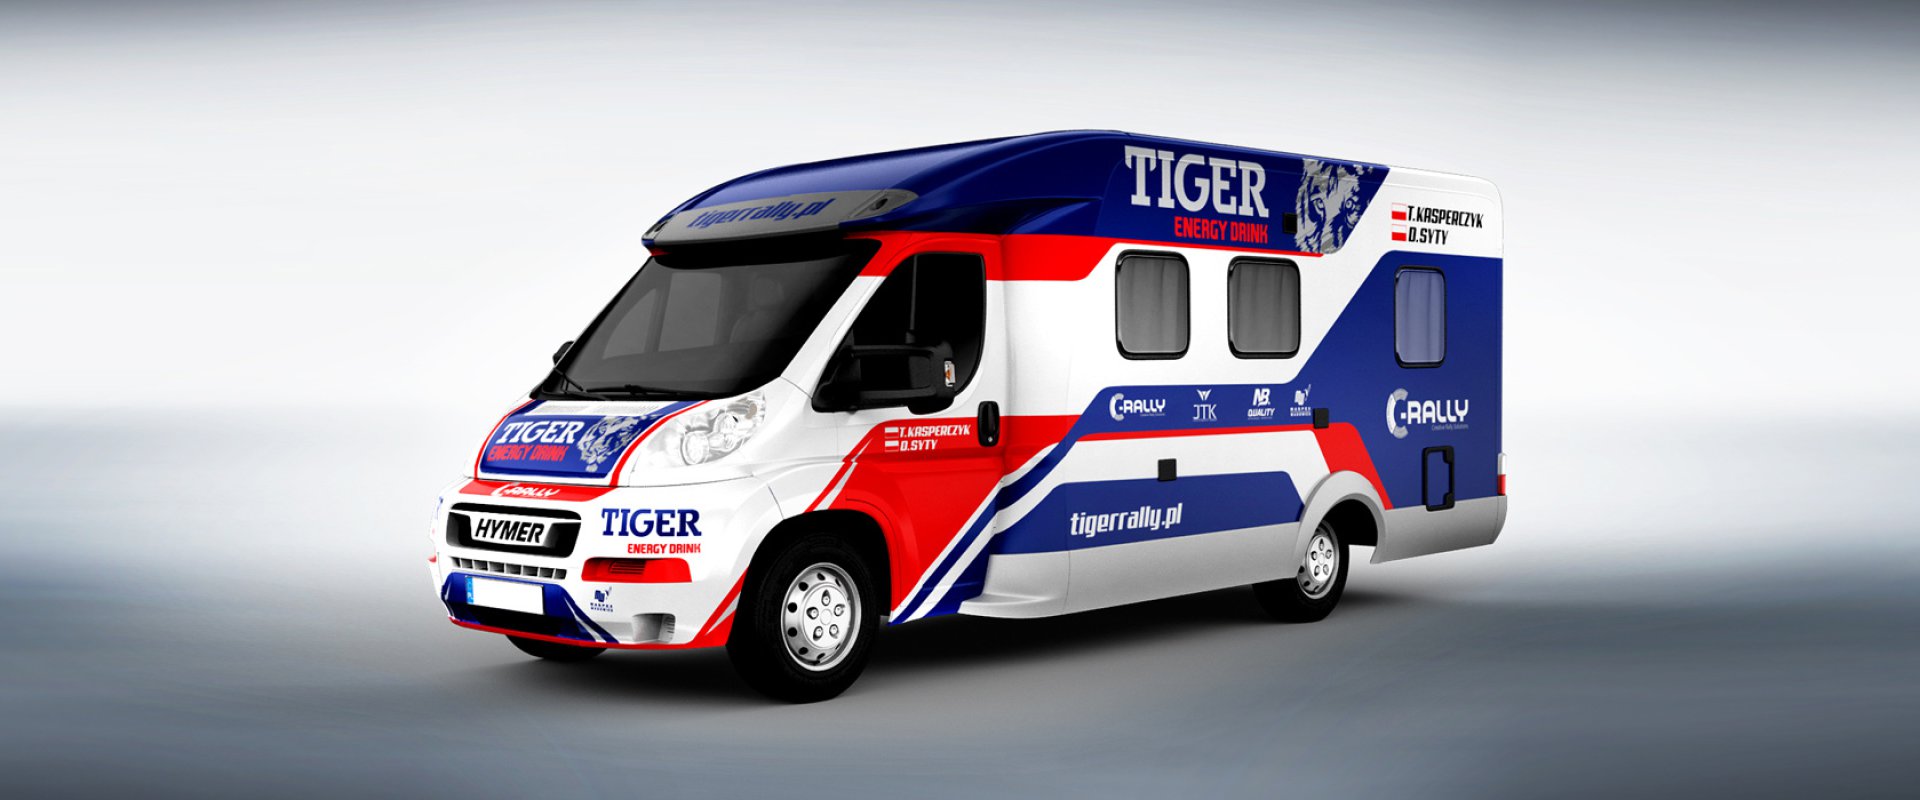 Tiger Rally Team #1